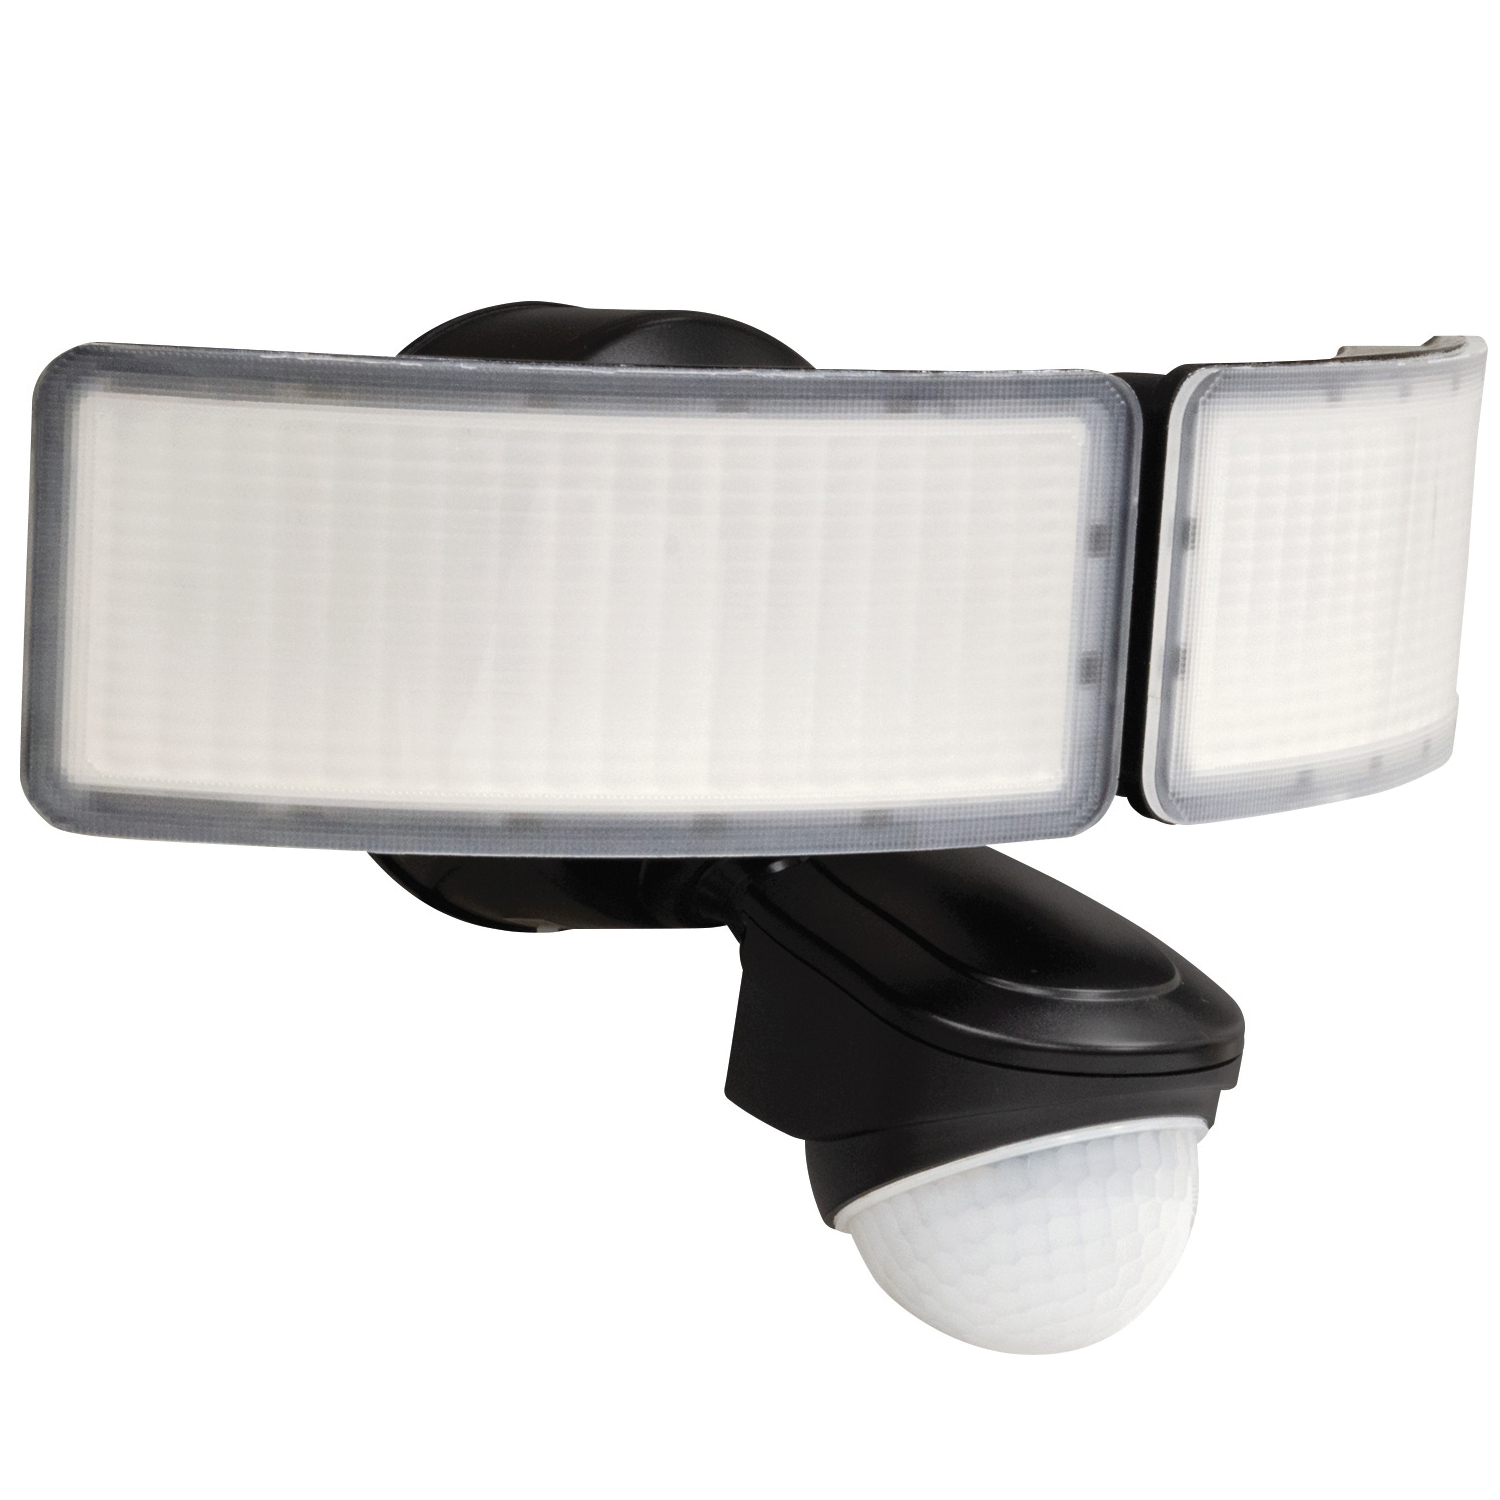 Security Light, 110/240 V, 24 W, 2-Lamp, LED Lamp, Daylight Light, 2400 Lumens, Plastic Fixture